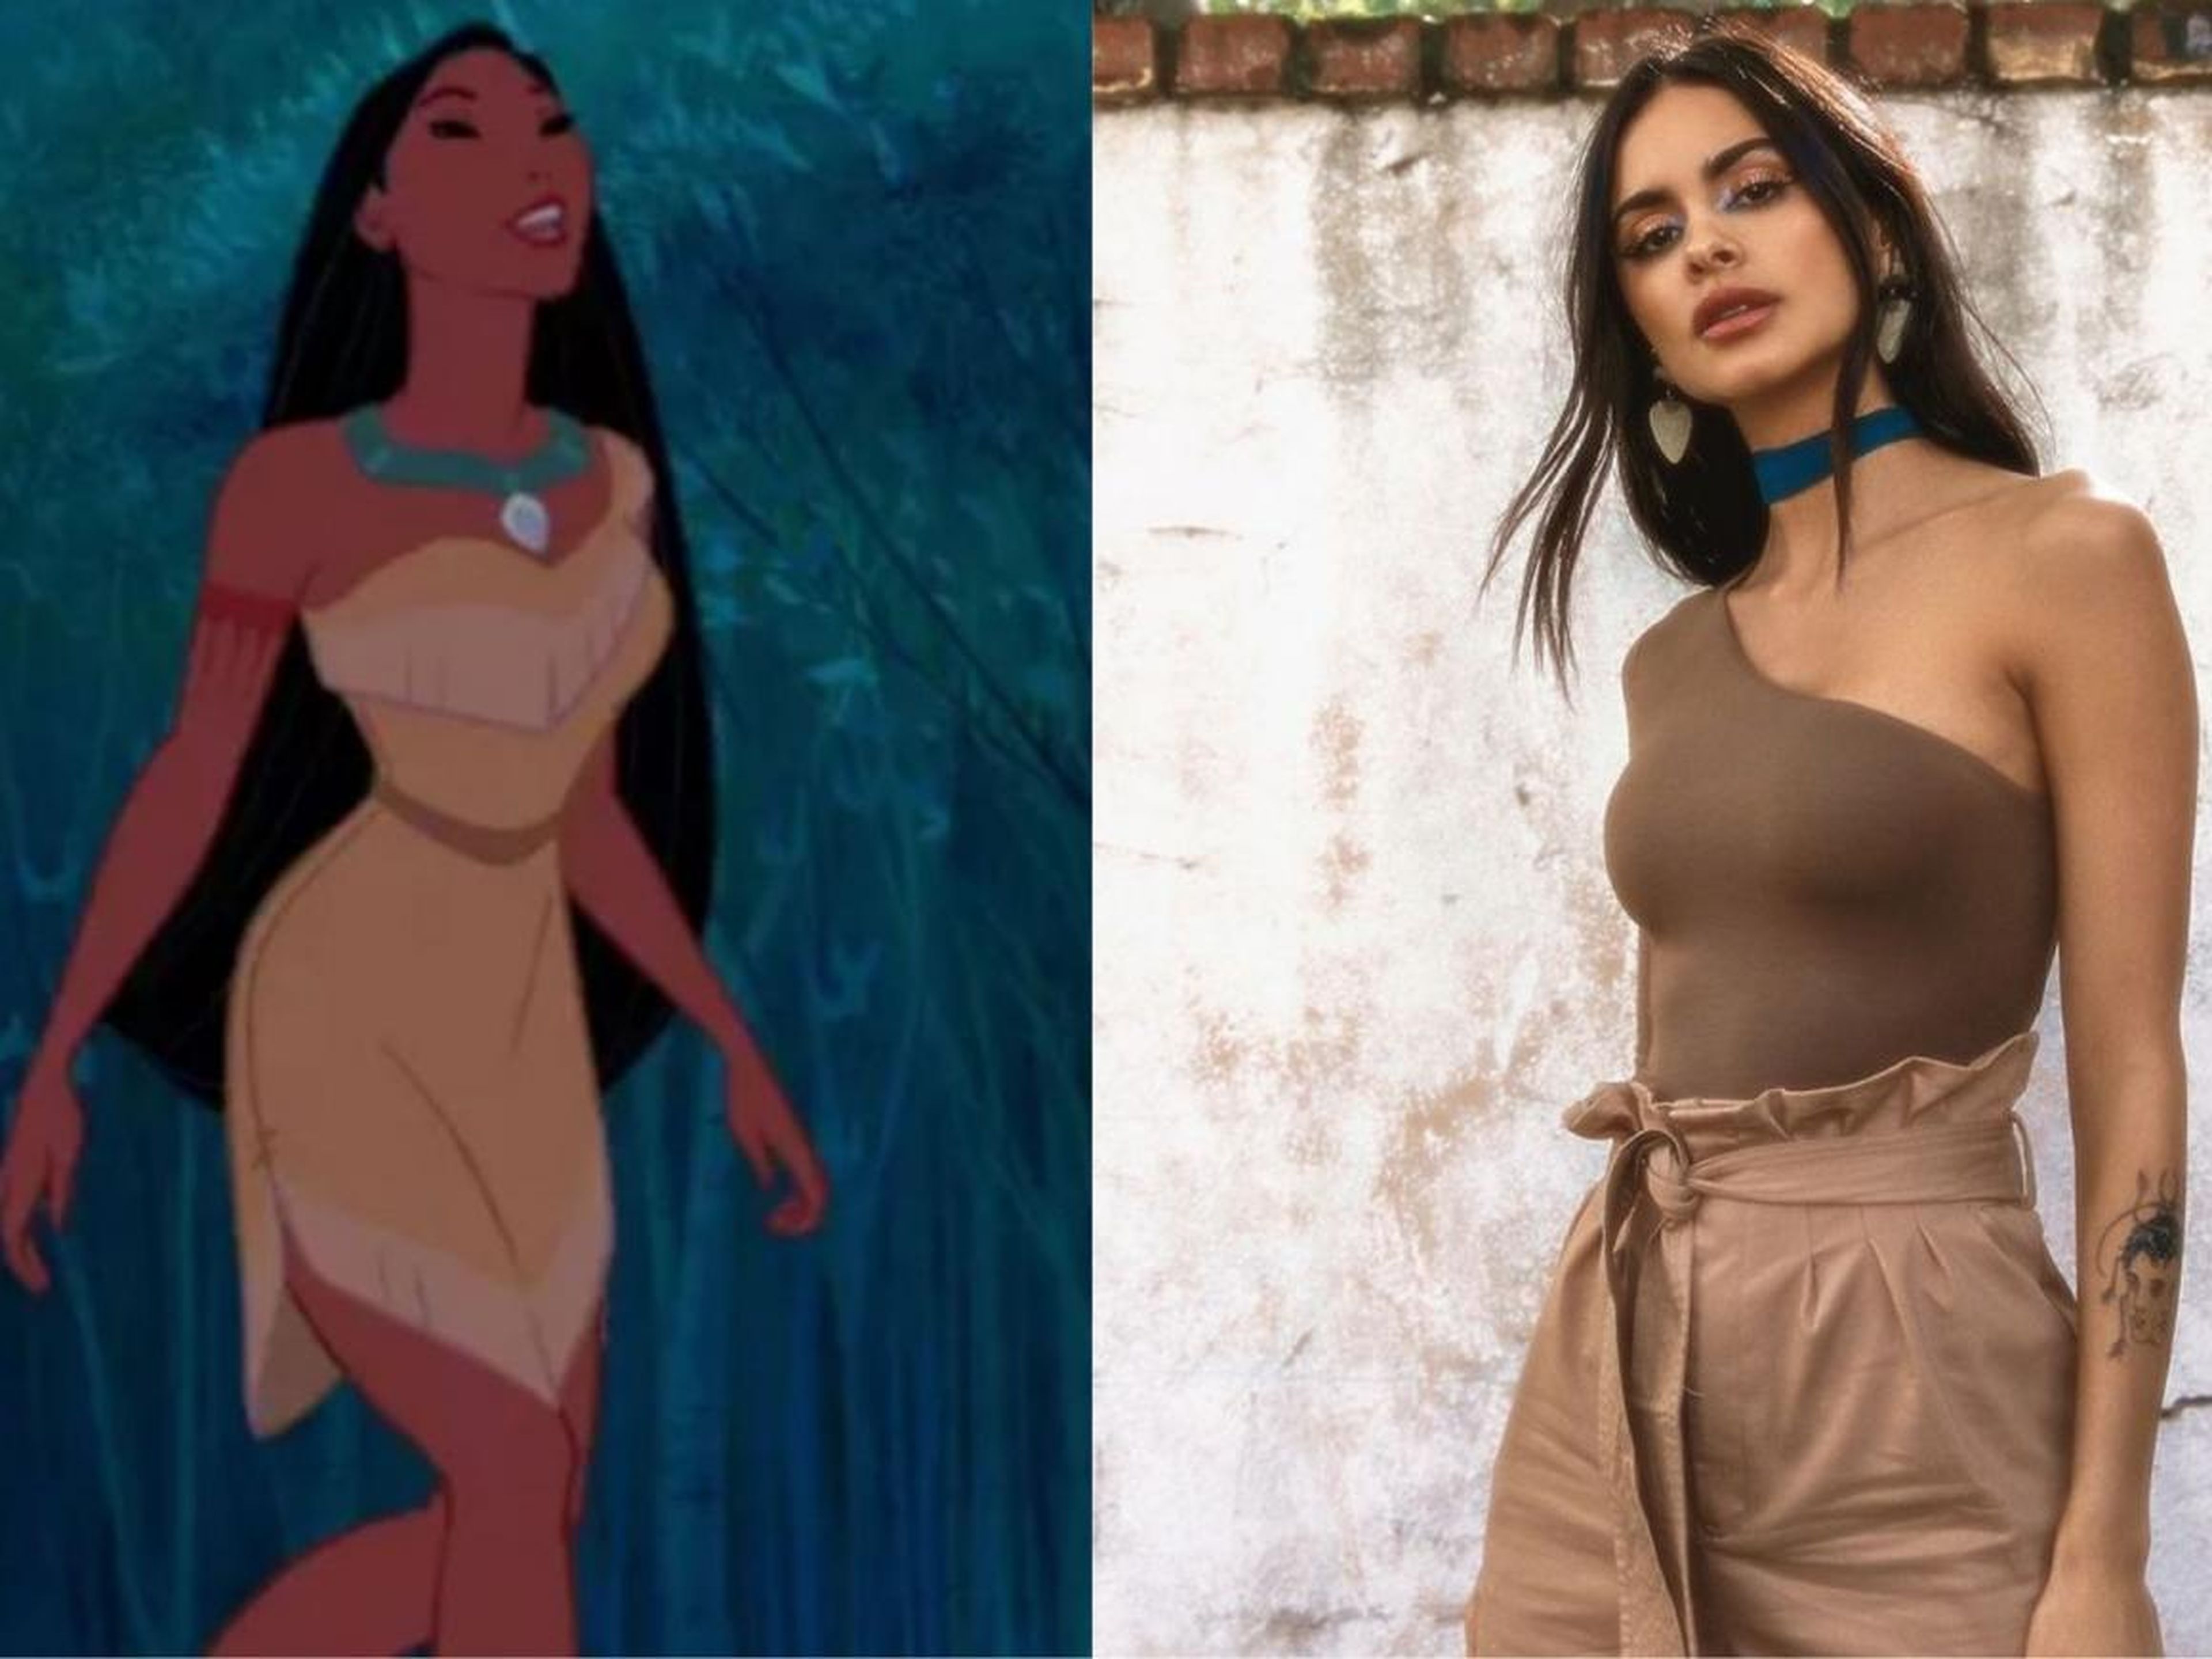 Izquierda: Pocahontas. Derecha: la modelo Sophia Esperanza. Maquillaje de Hayley Kassel.